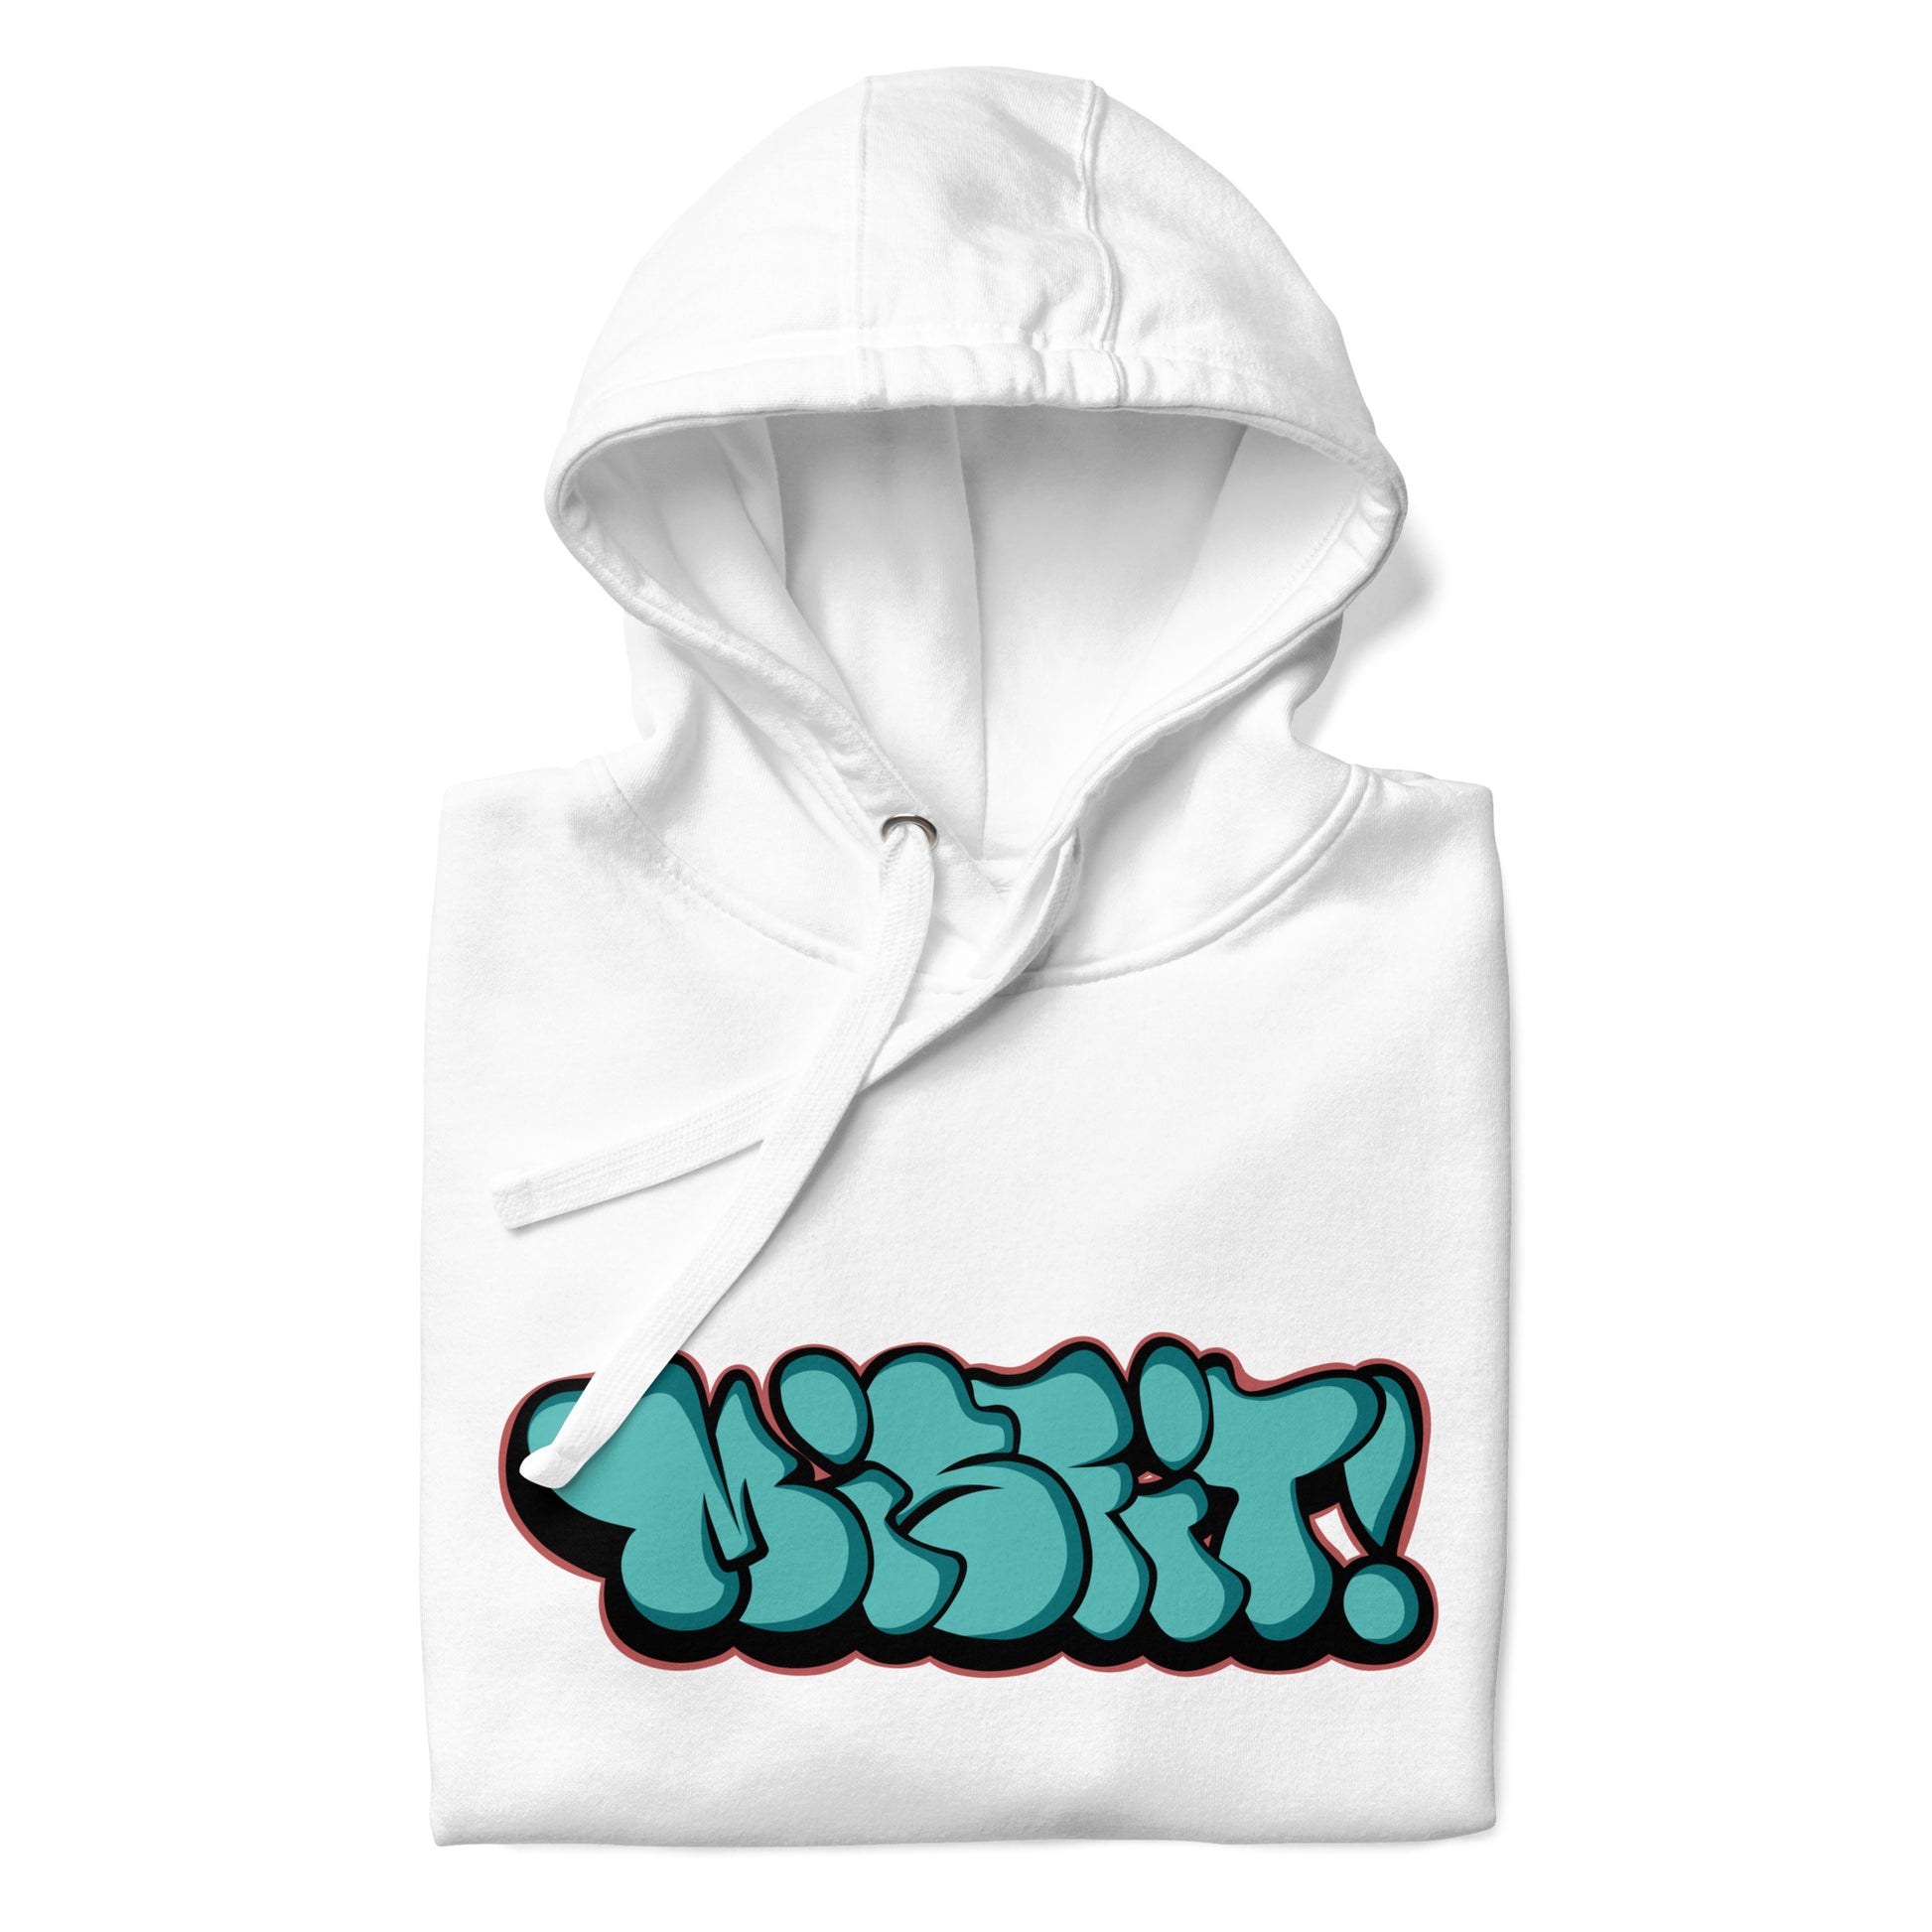 folded Misfit throwie hoodie by B.Different Clothing street art graffiti inspired streetwear brand